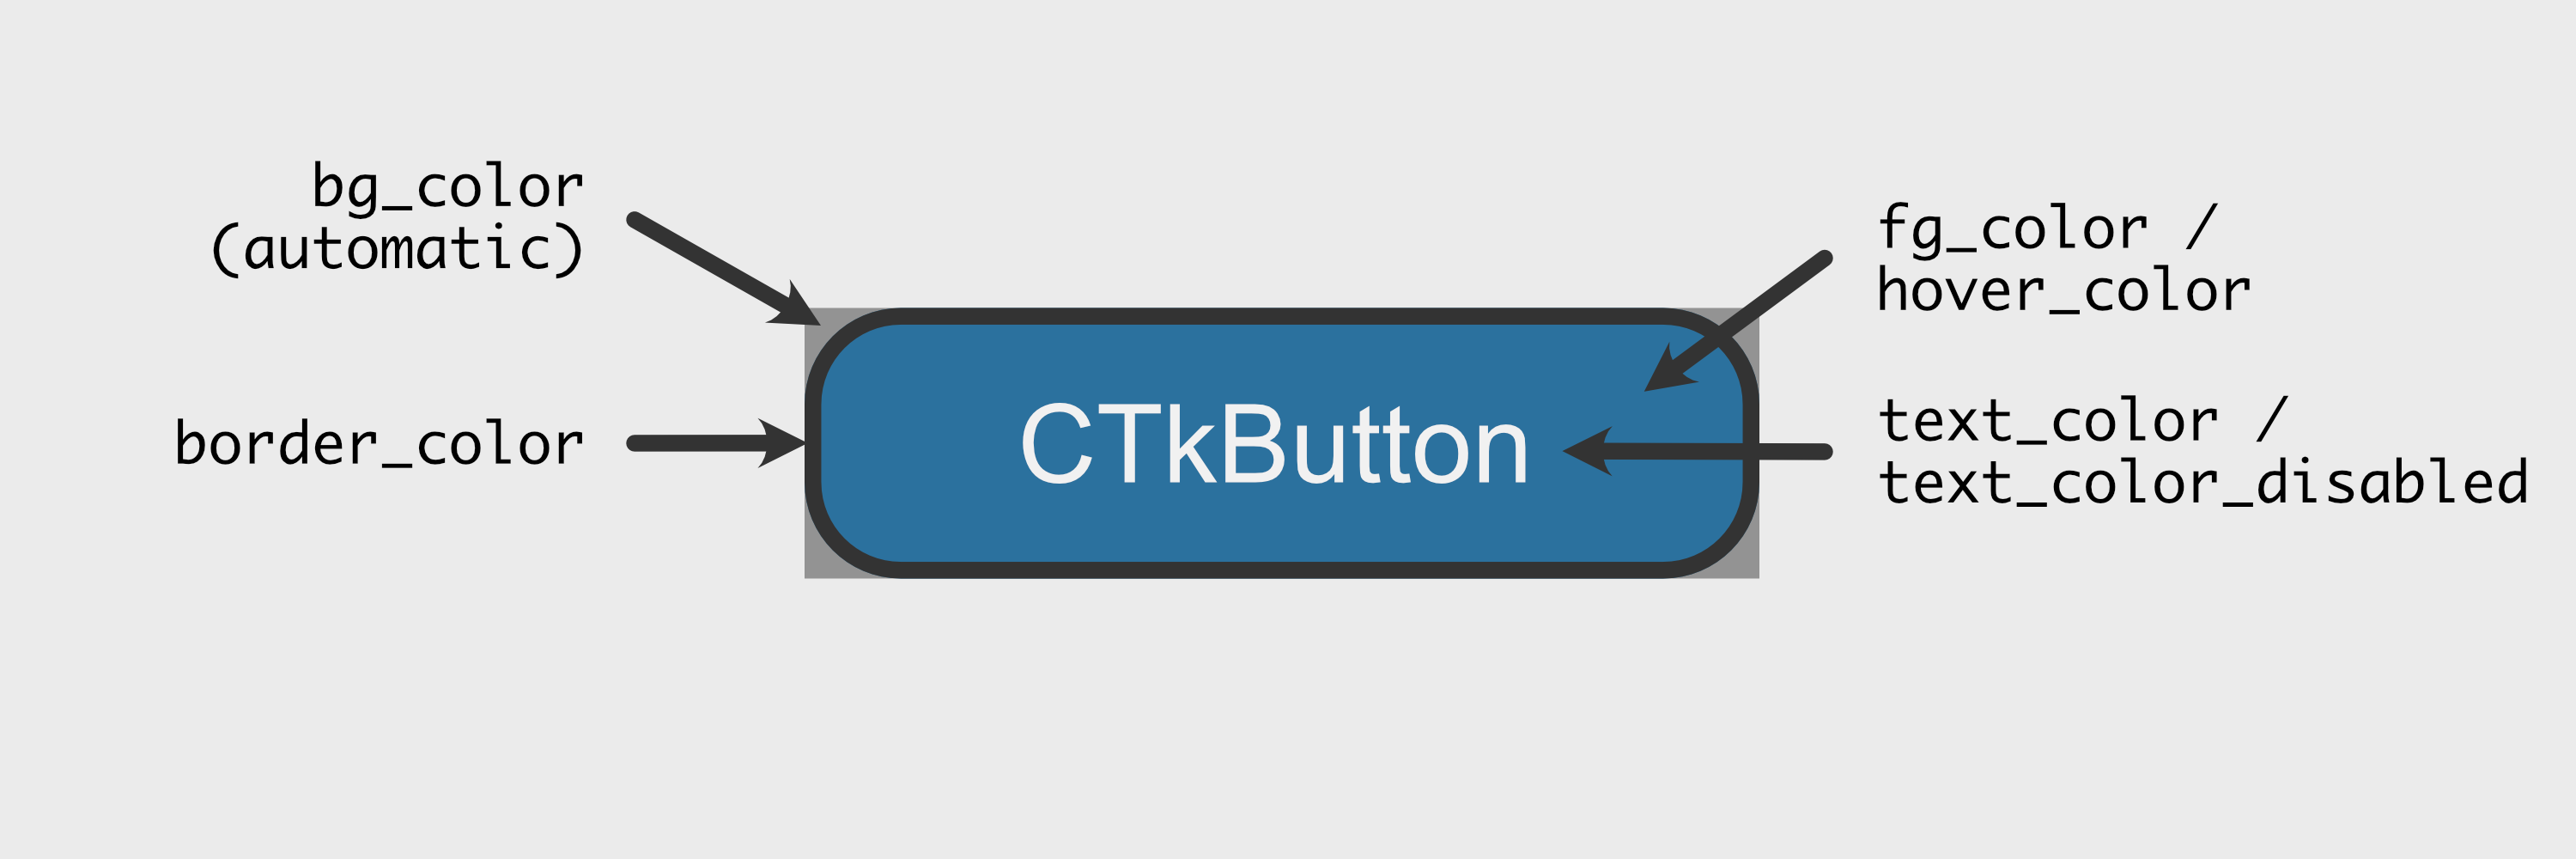 CTkButton color attributes explained